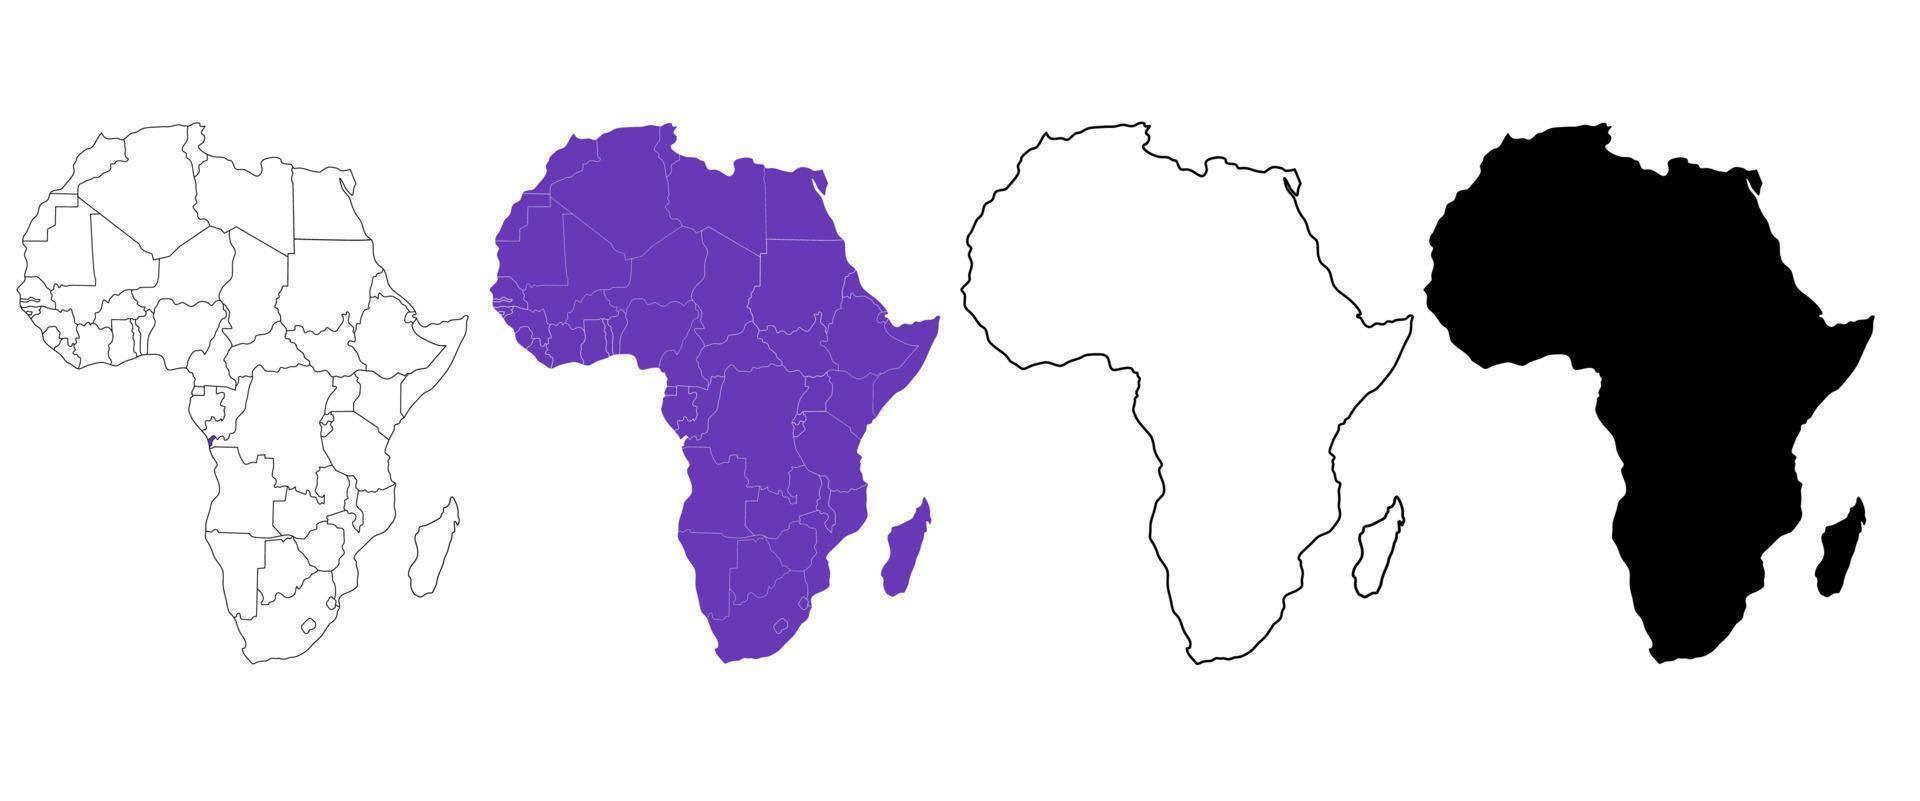 conjunto de mapa do continente africano isolado no fundo branco vetor